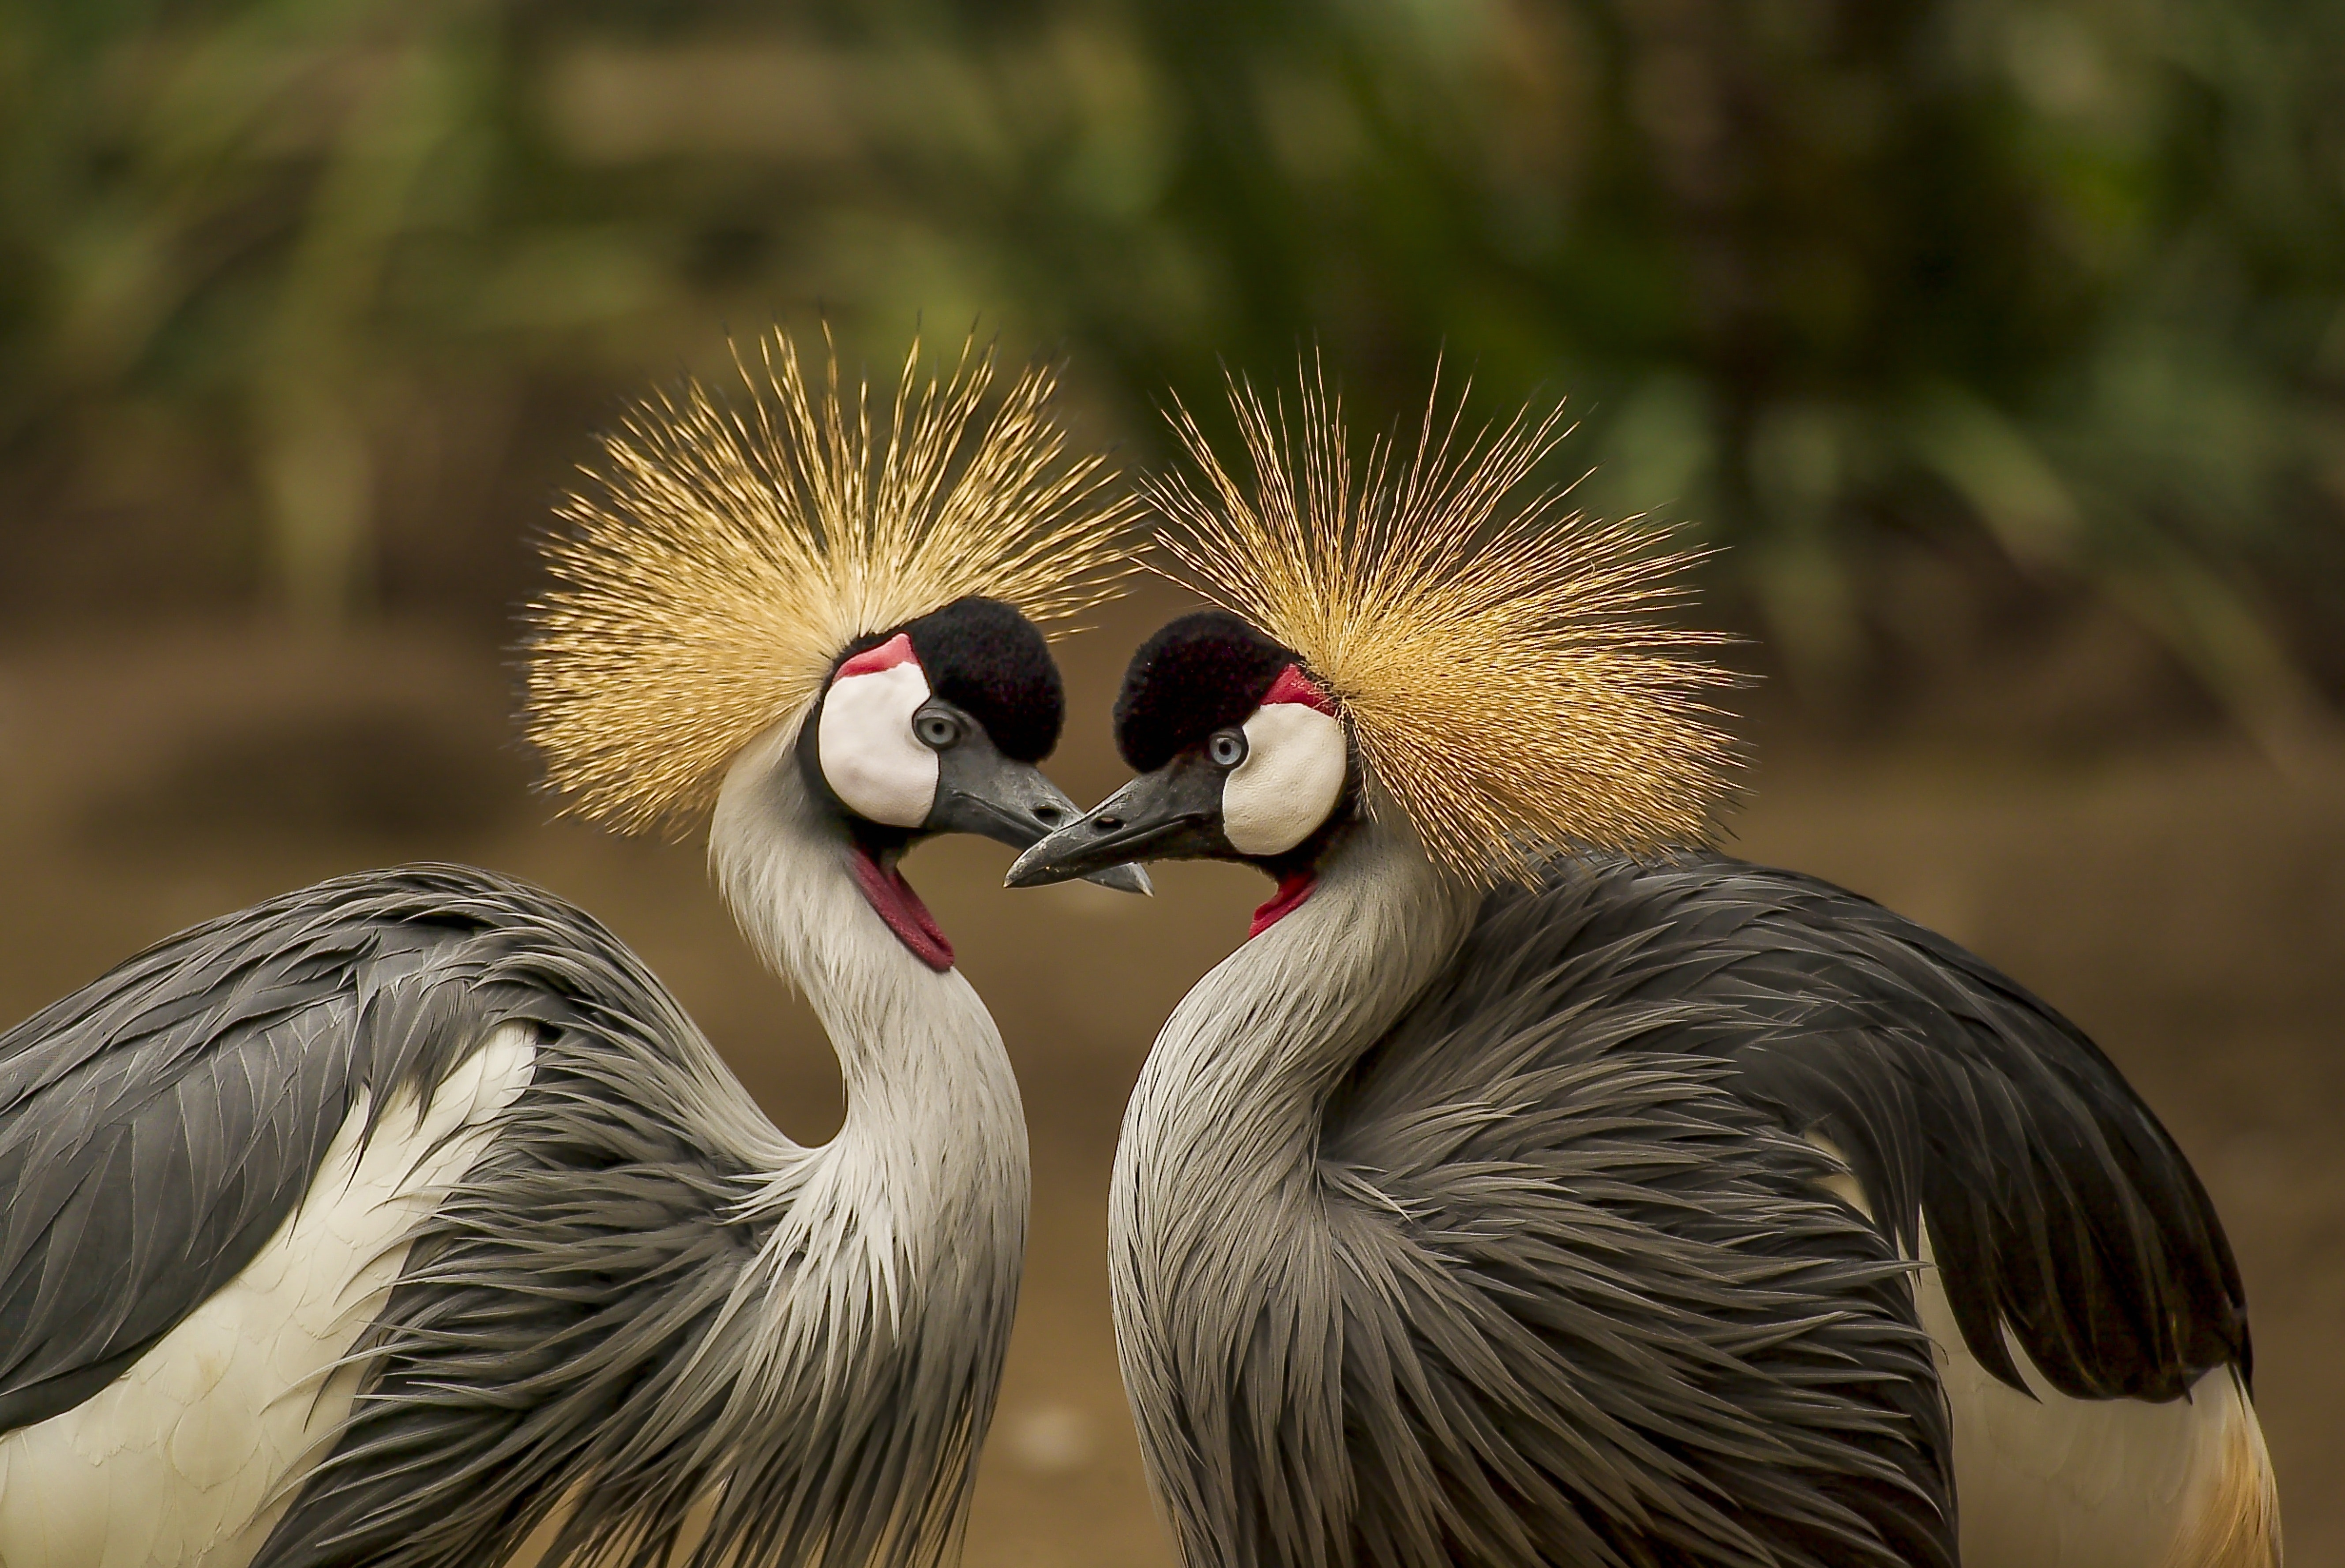 A pair of grey crowned cranes